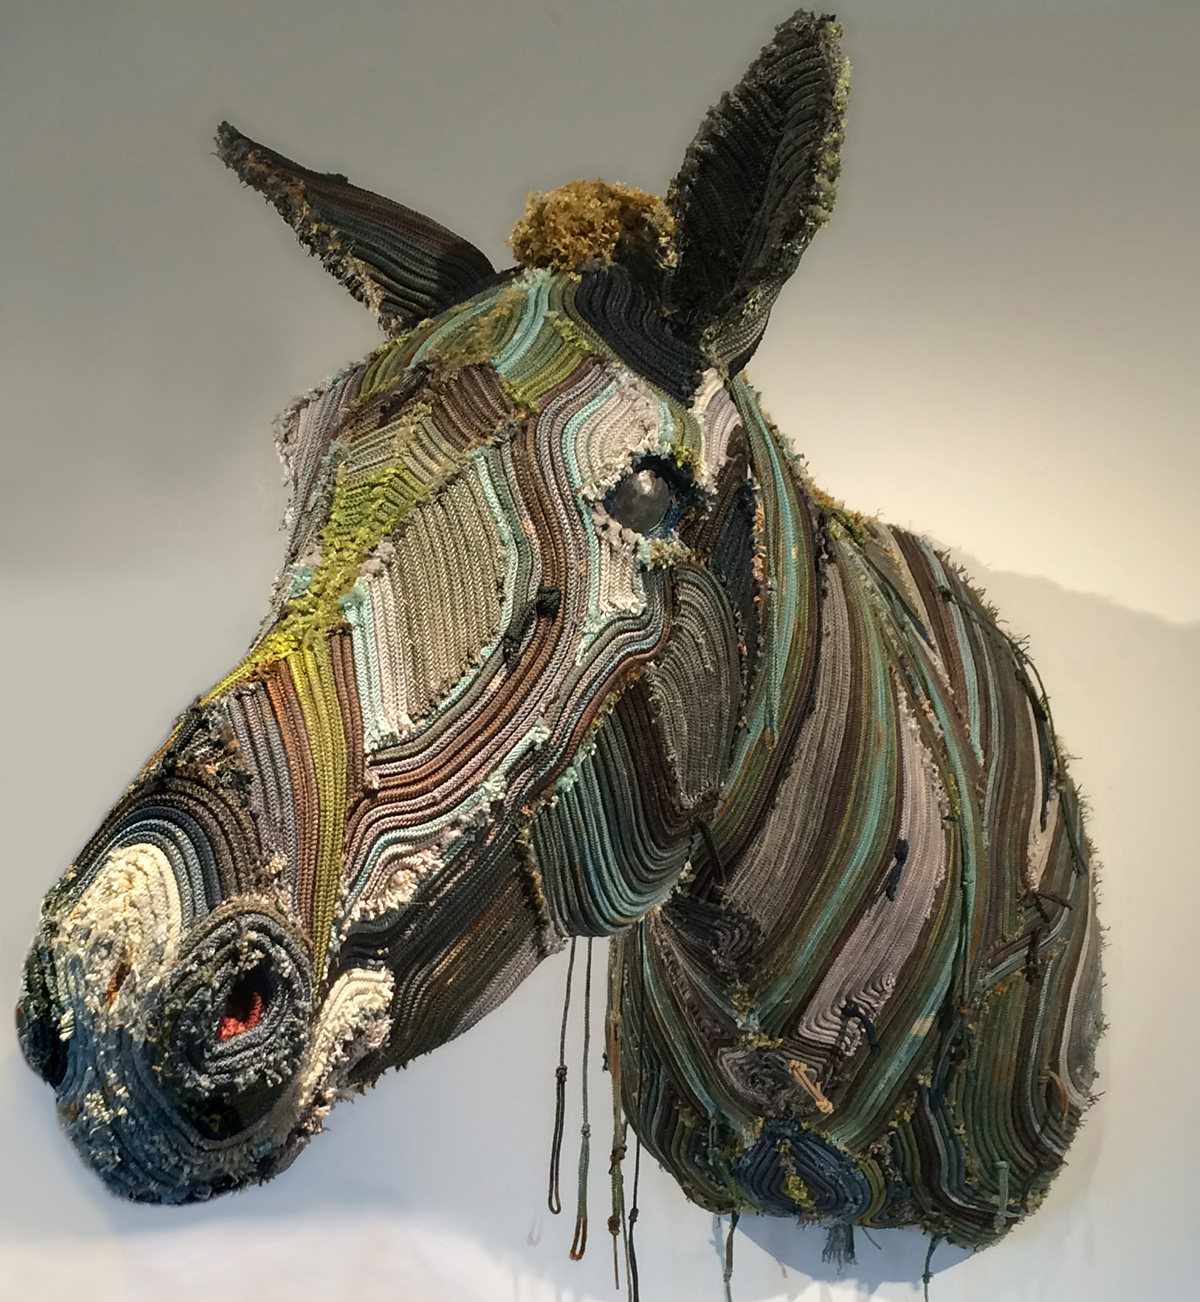   Przewalski’s East Ridge Horse , dyed longline fishing gear and mixed media, 39" x 34" x 16"&nbsp; 